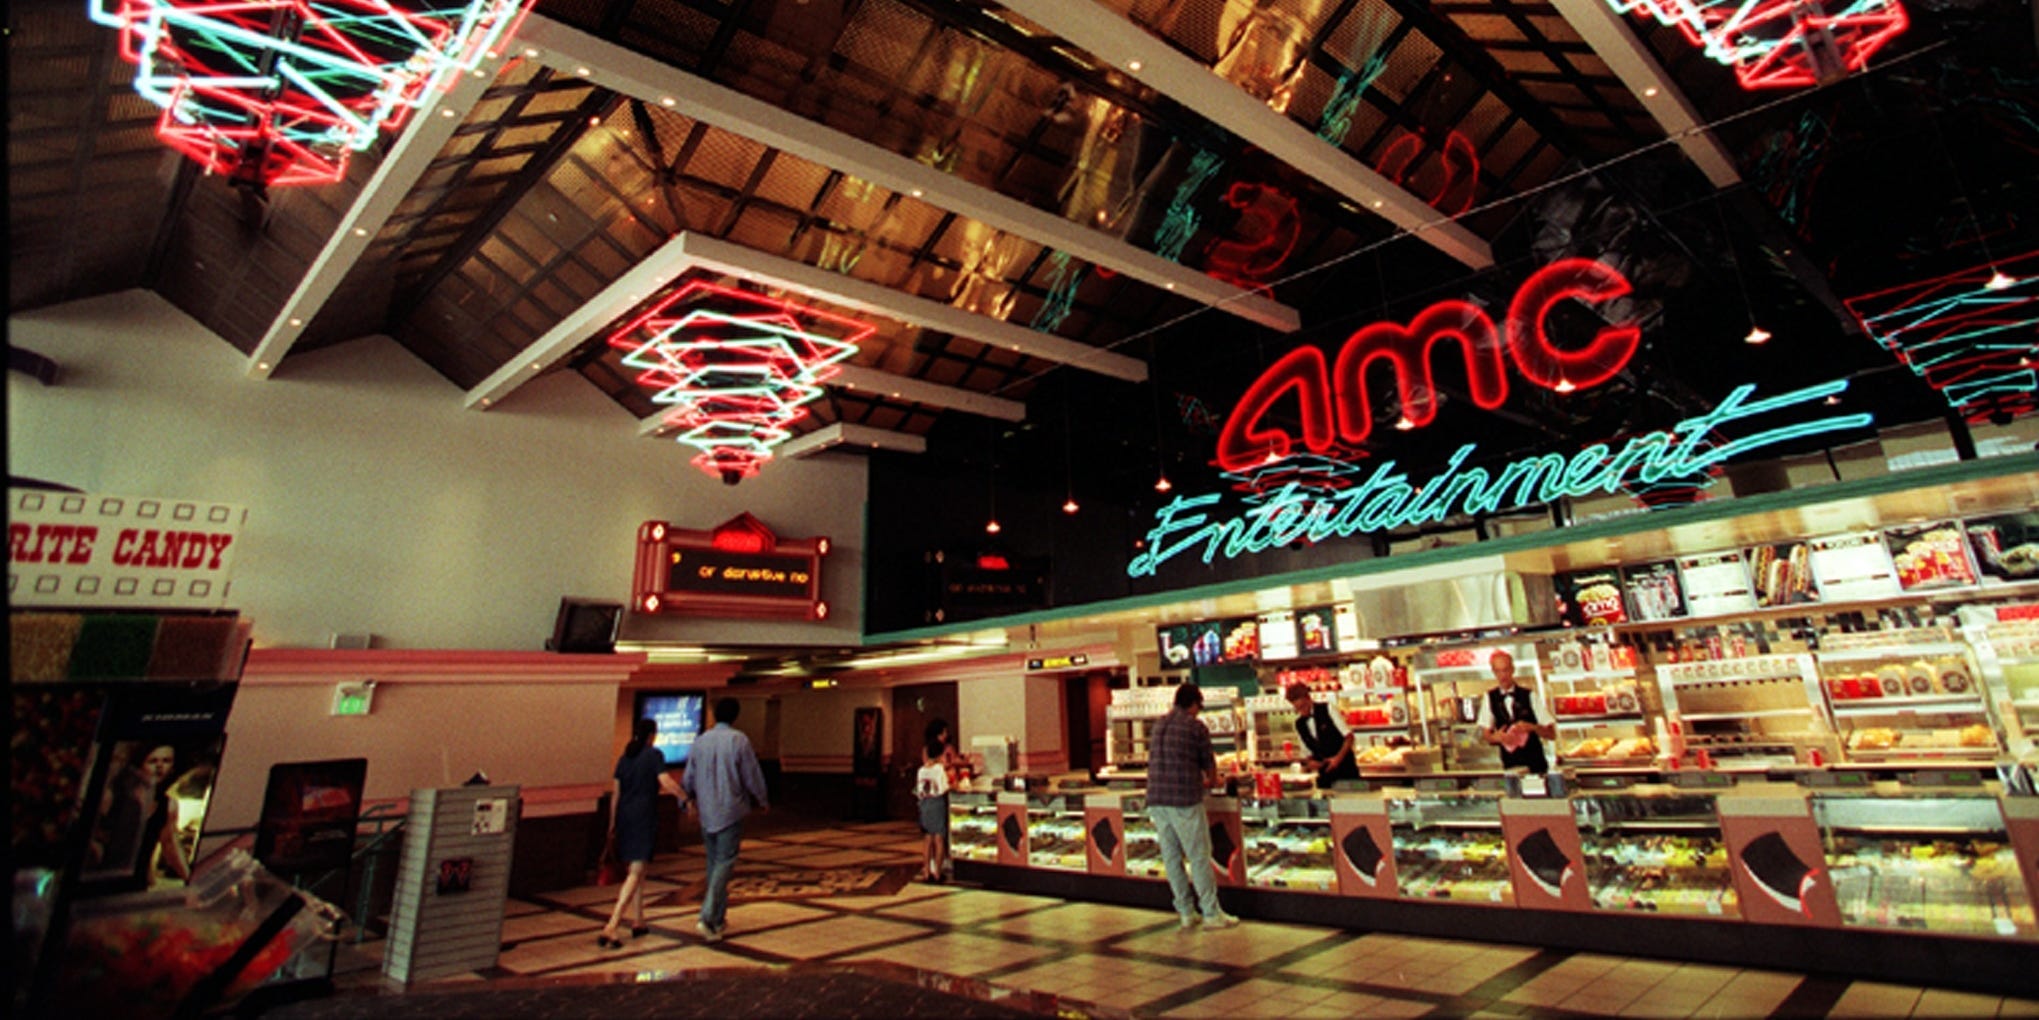 AMC theater